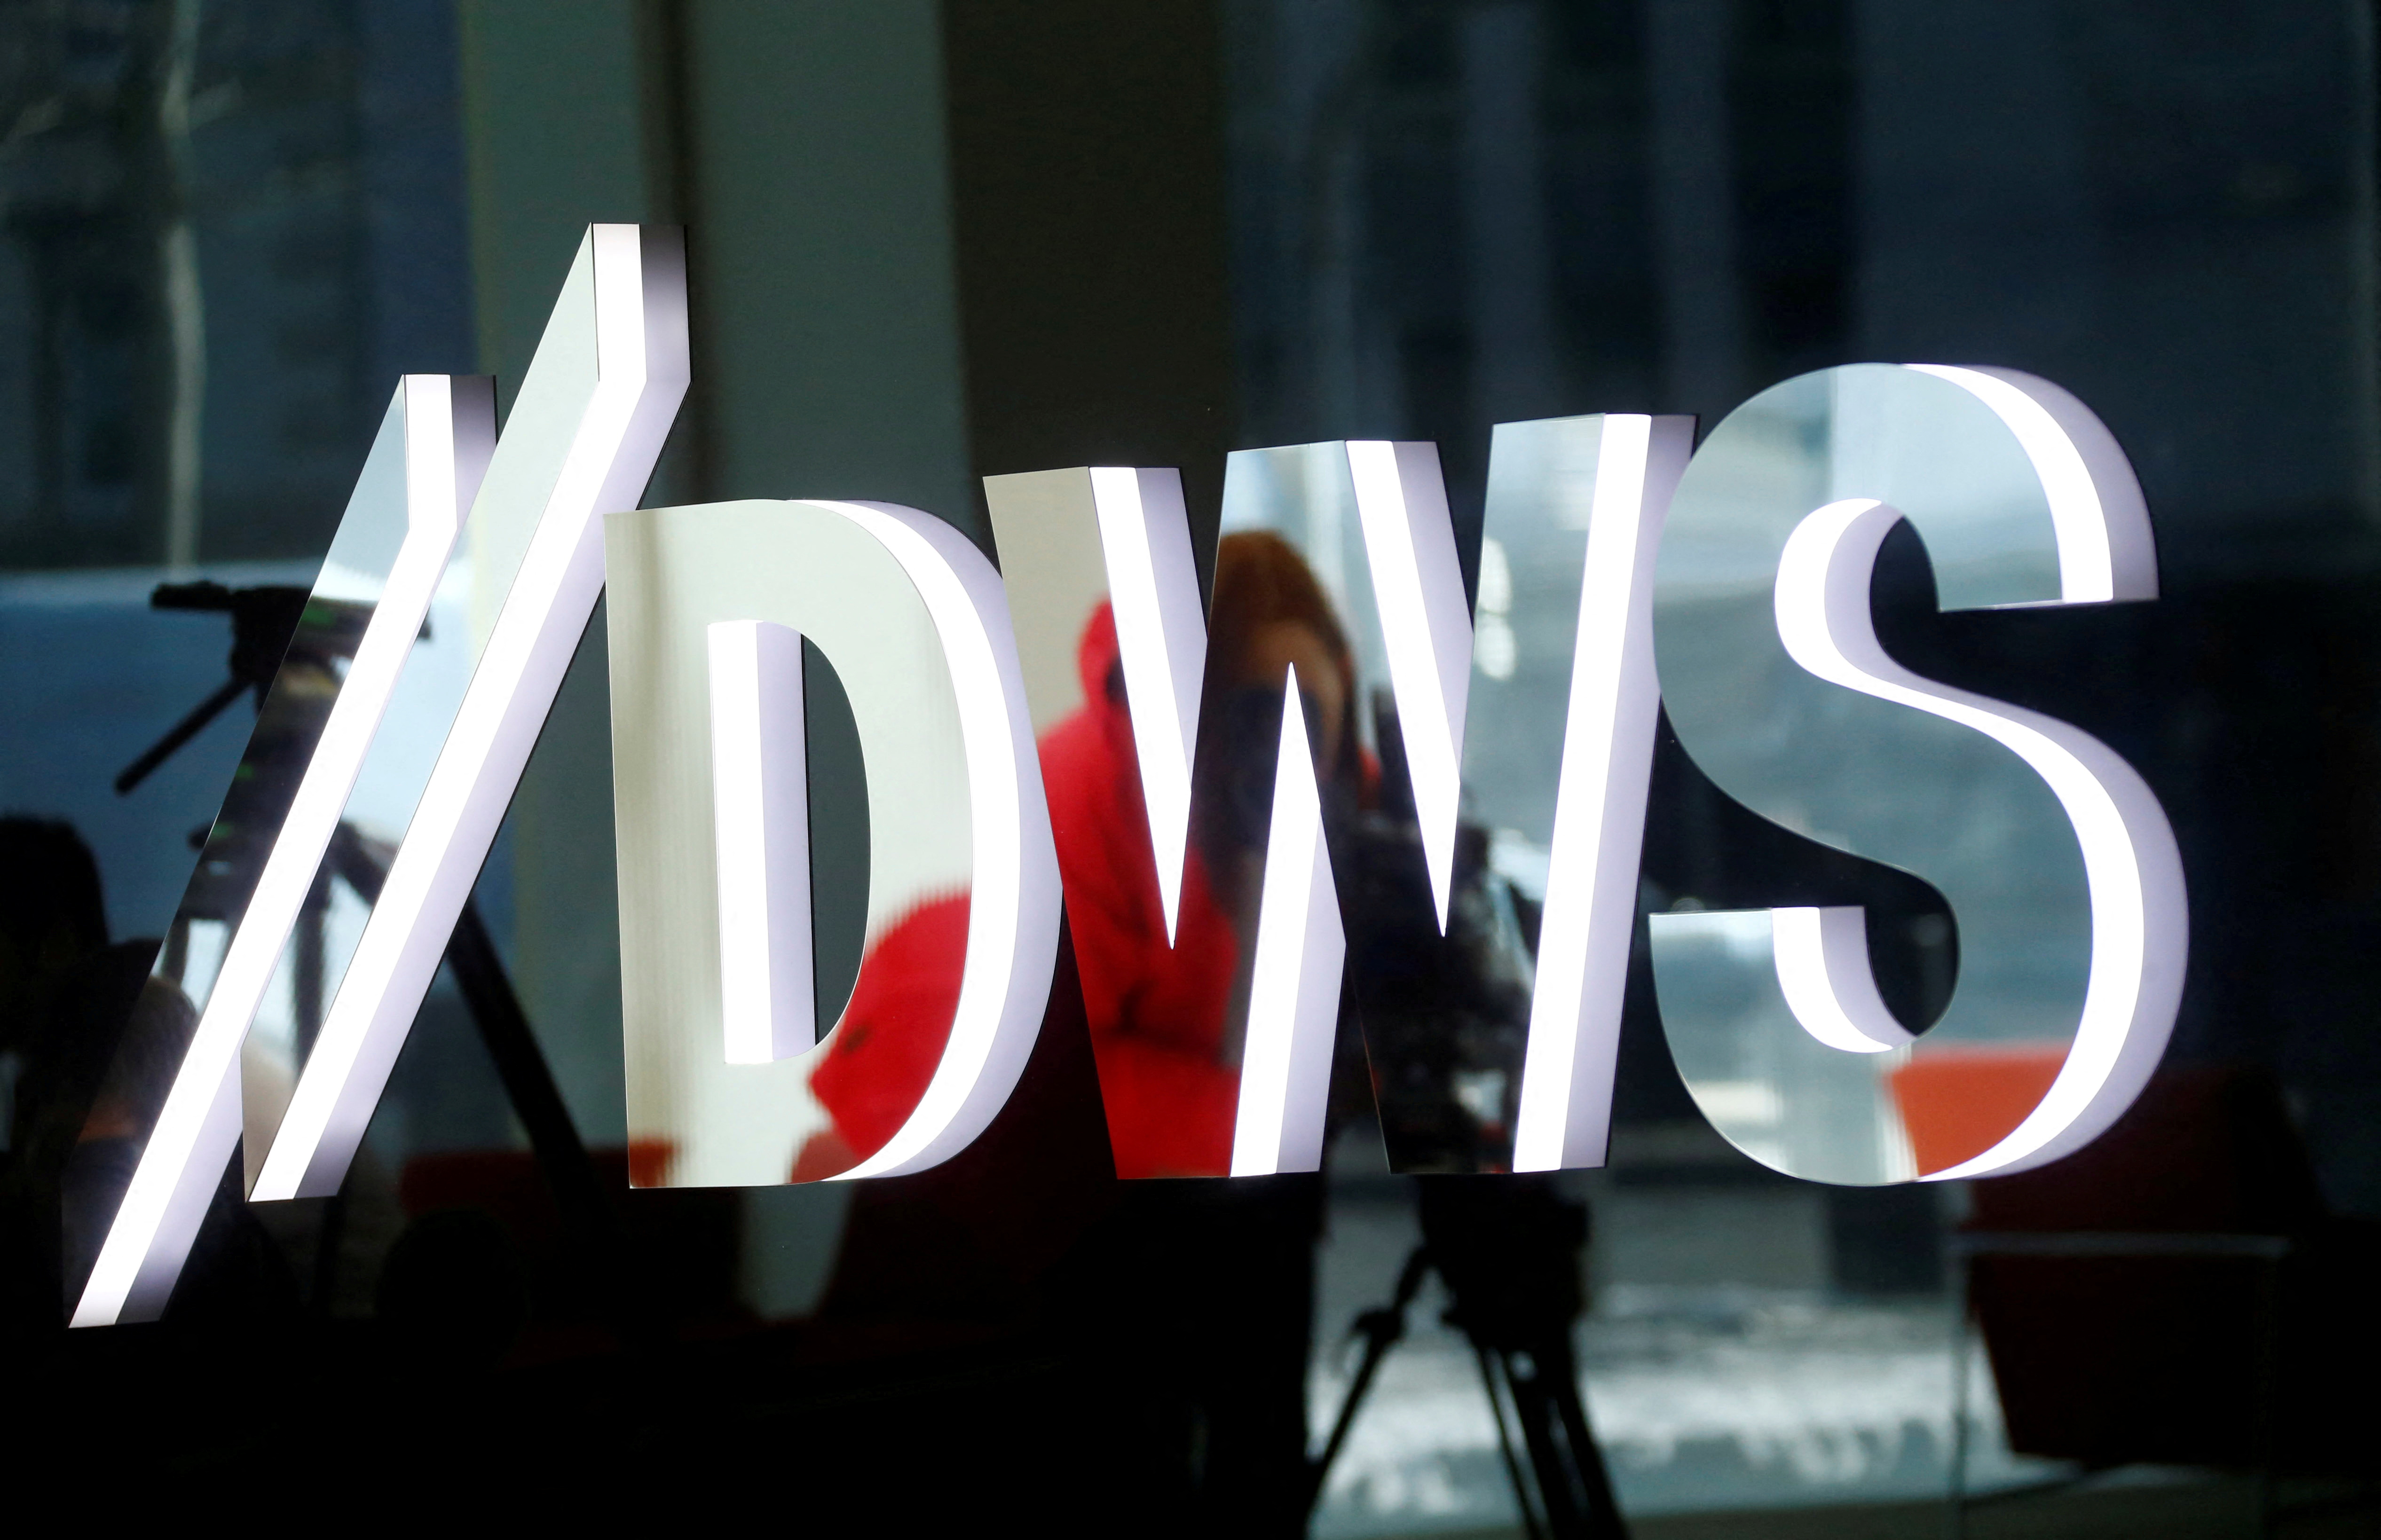 The new logo of Deutsche Bank's DWS Asset Management is pictured at their headquarters in Frankfurt